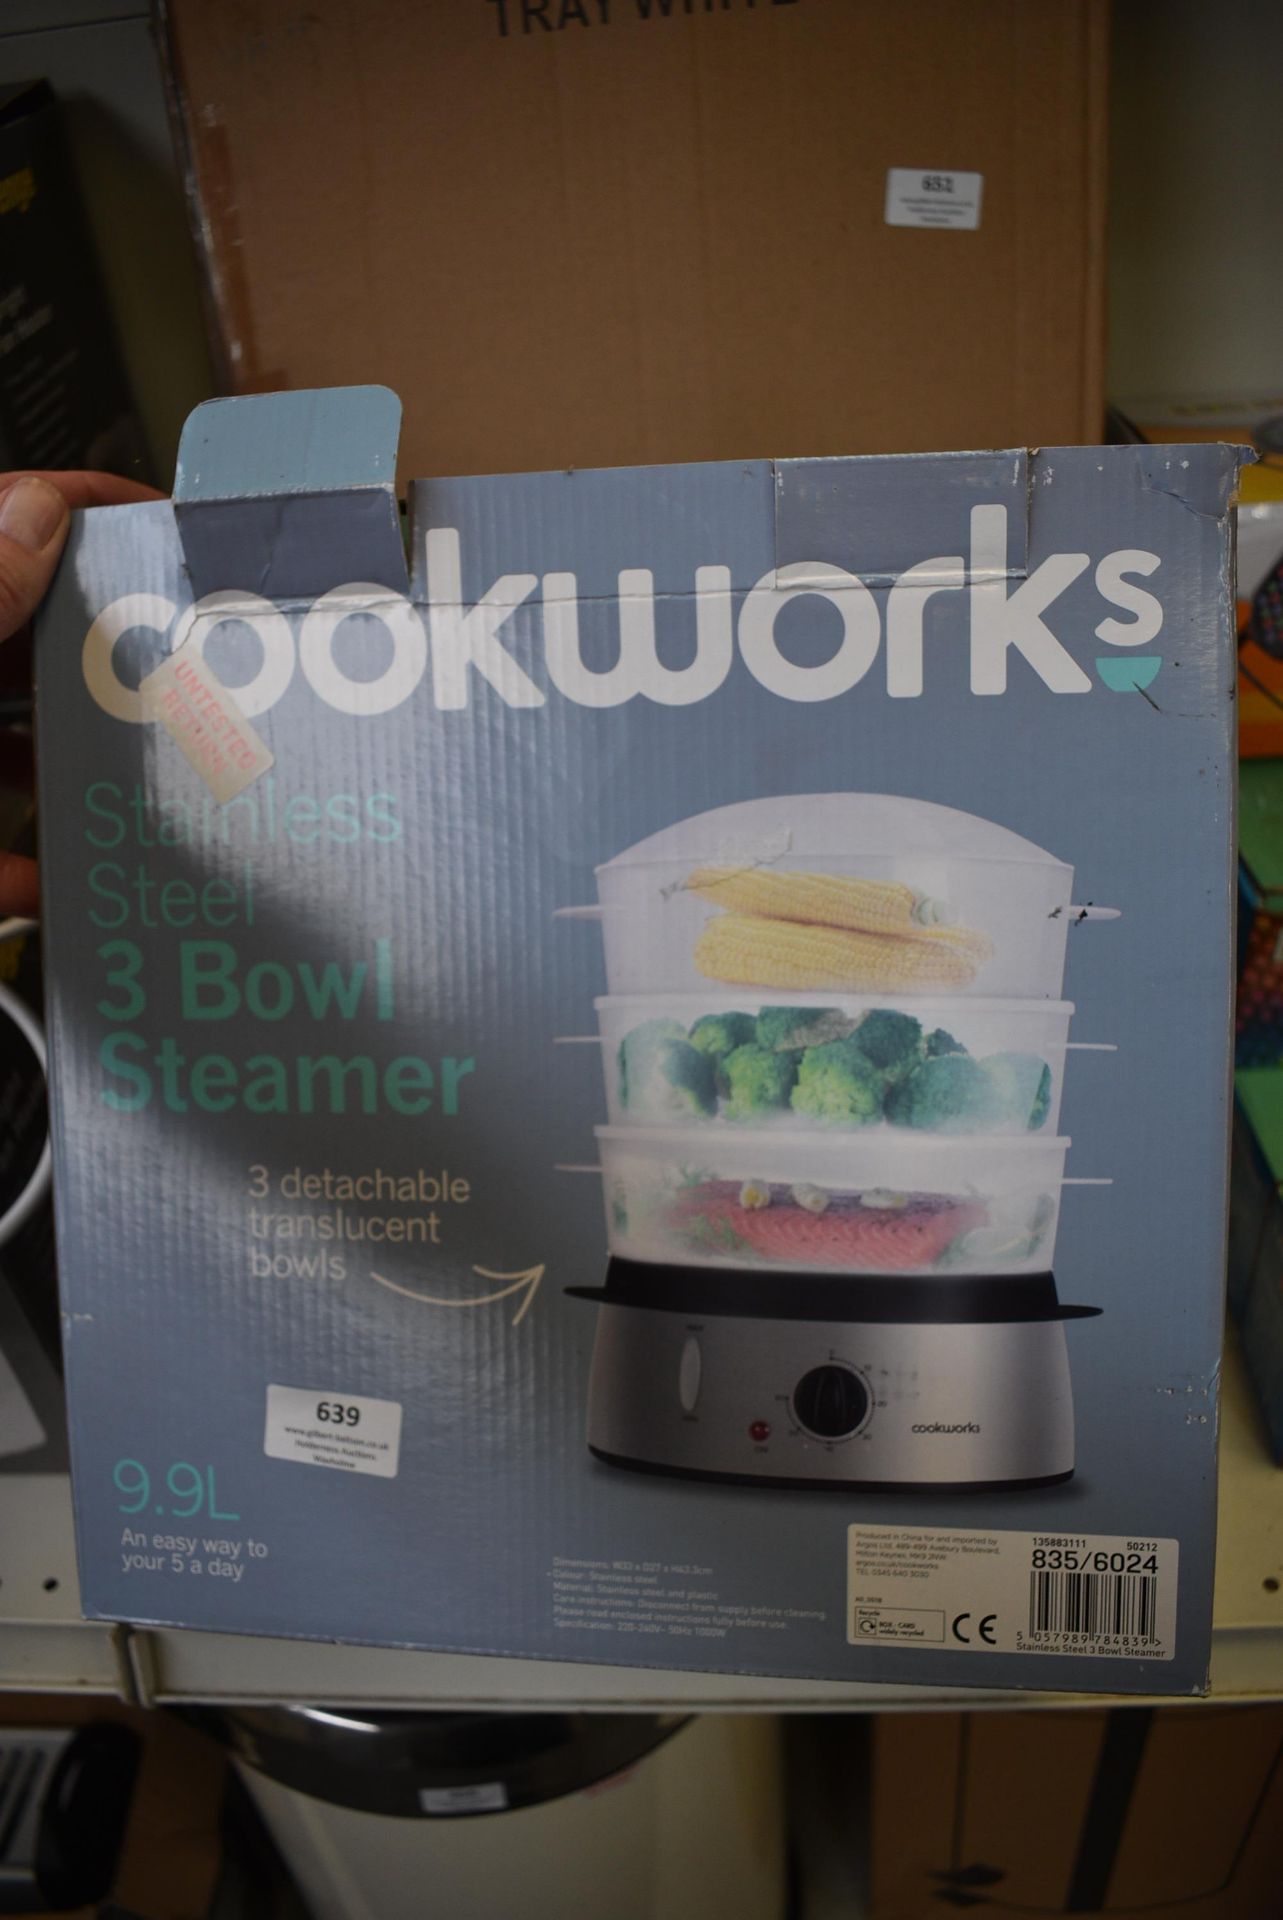 Cookworks Three Bowl Steamer